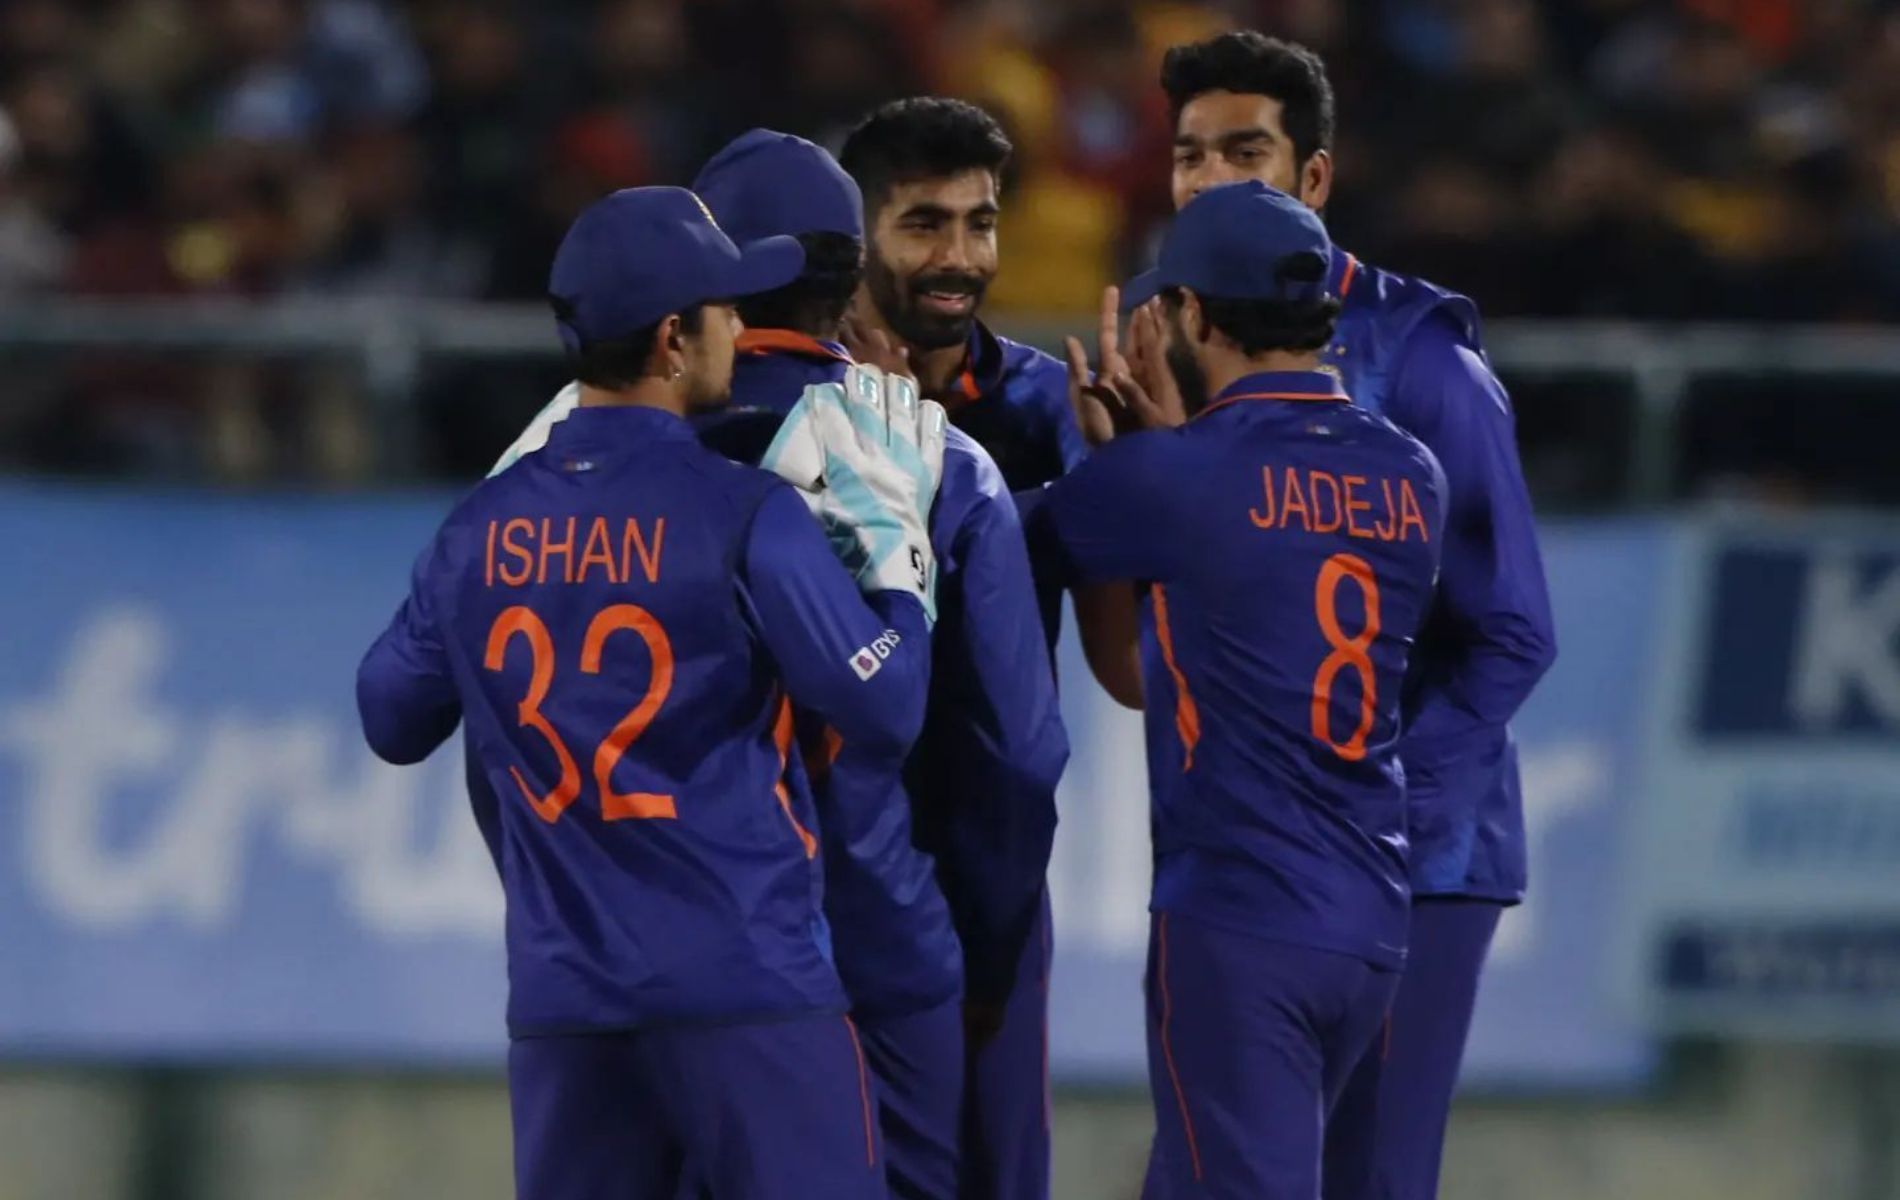 Indian Cricket Team. (Image source: BCCI/Instagram)